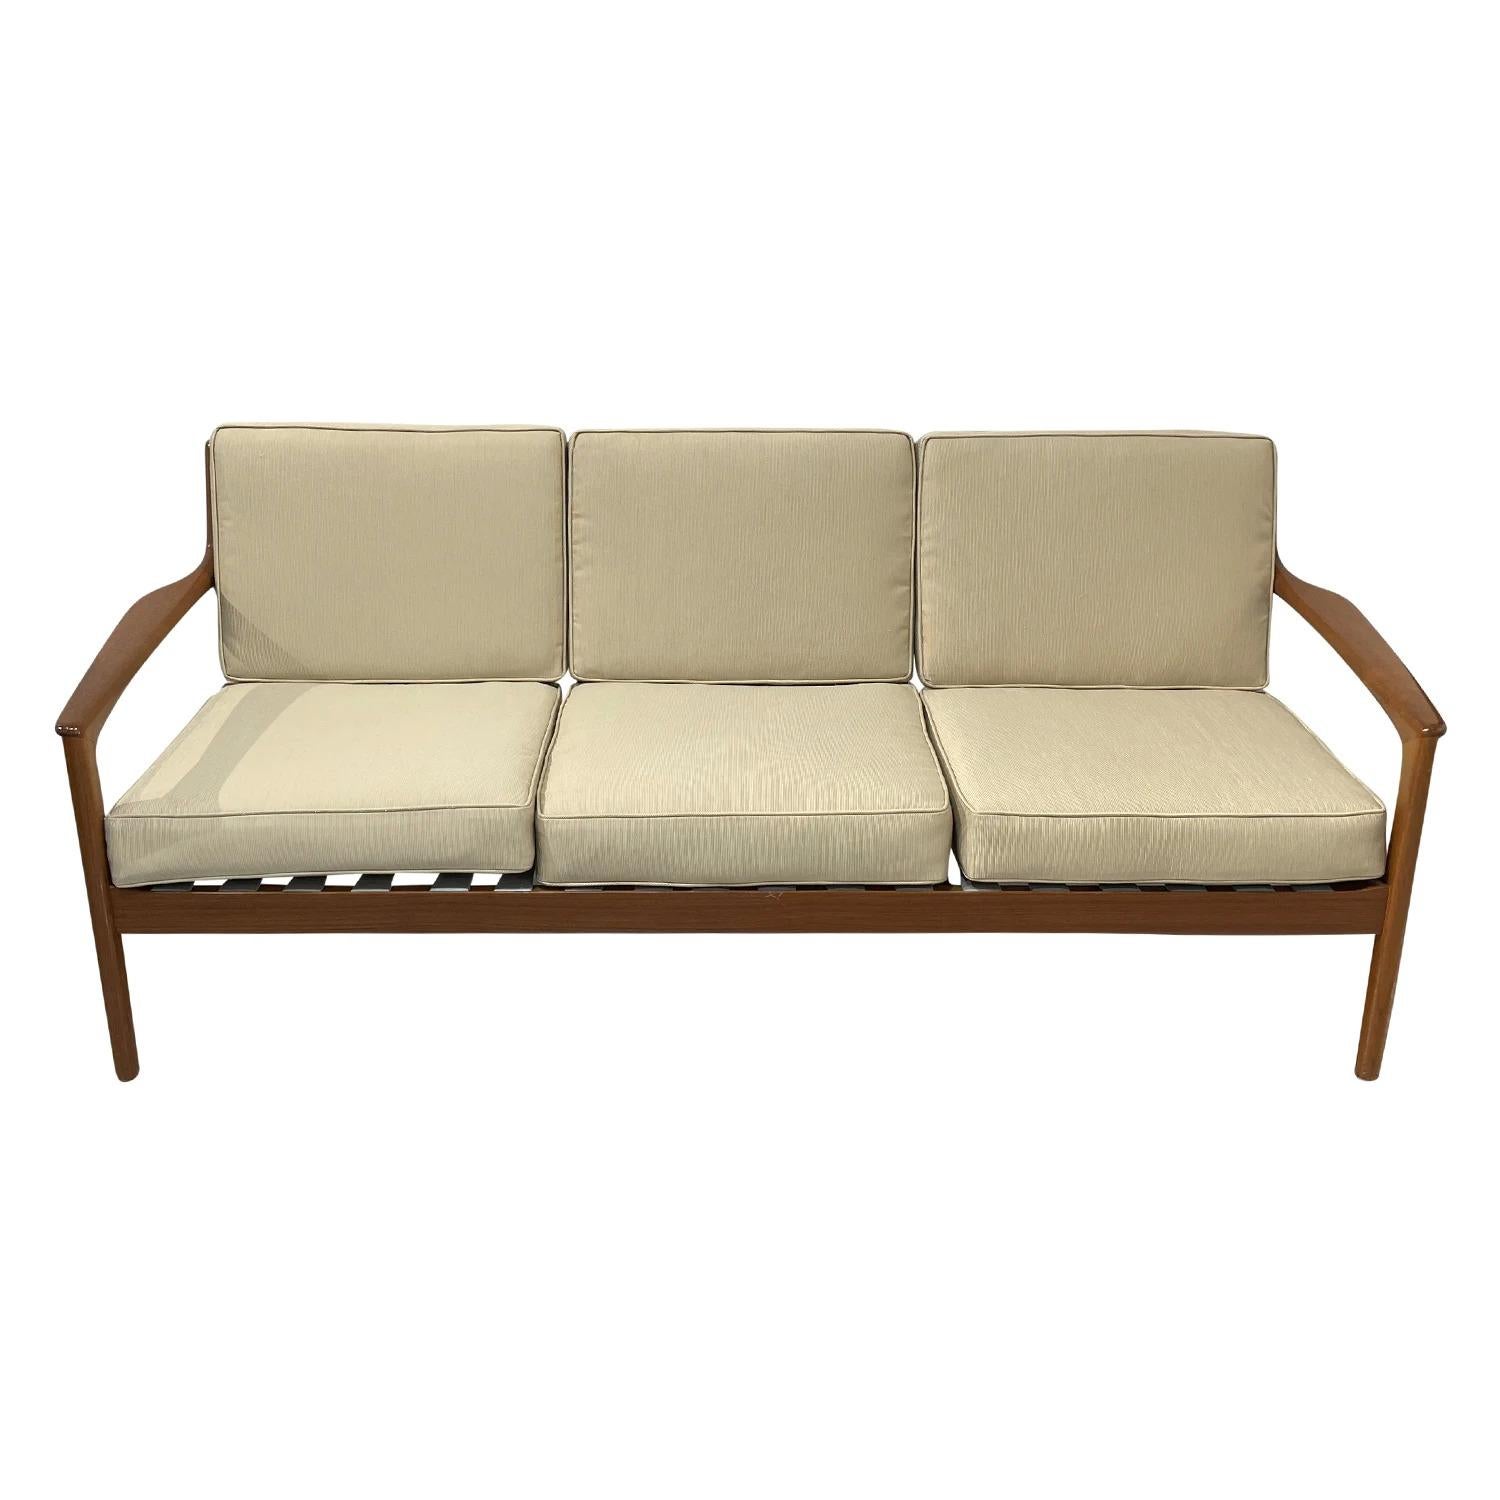 Mid-Century Modern 20th Century Swedish Dux Three Seater Teak Sofa, Vintage Settee by Folke Ohlsson For Sale